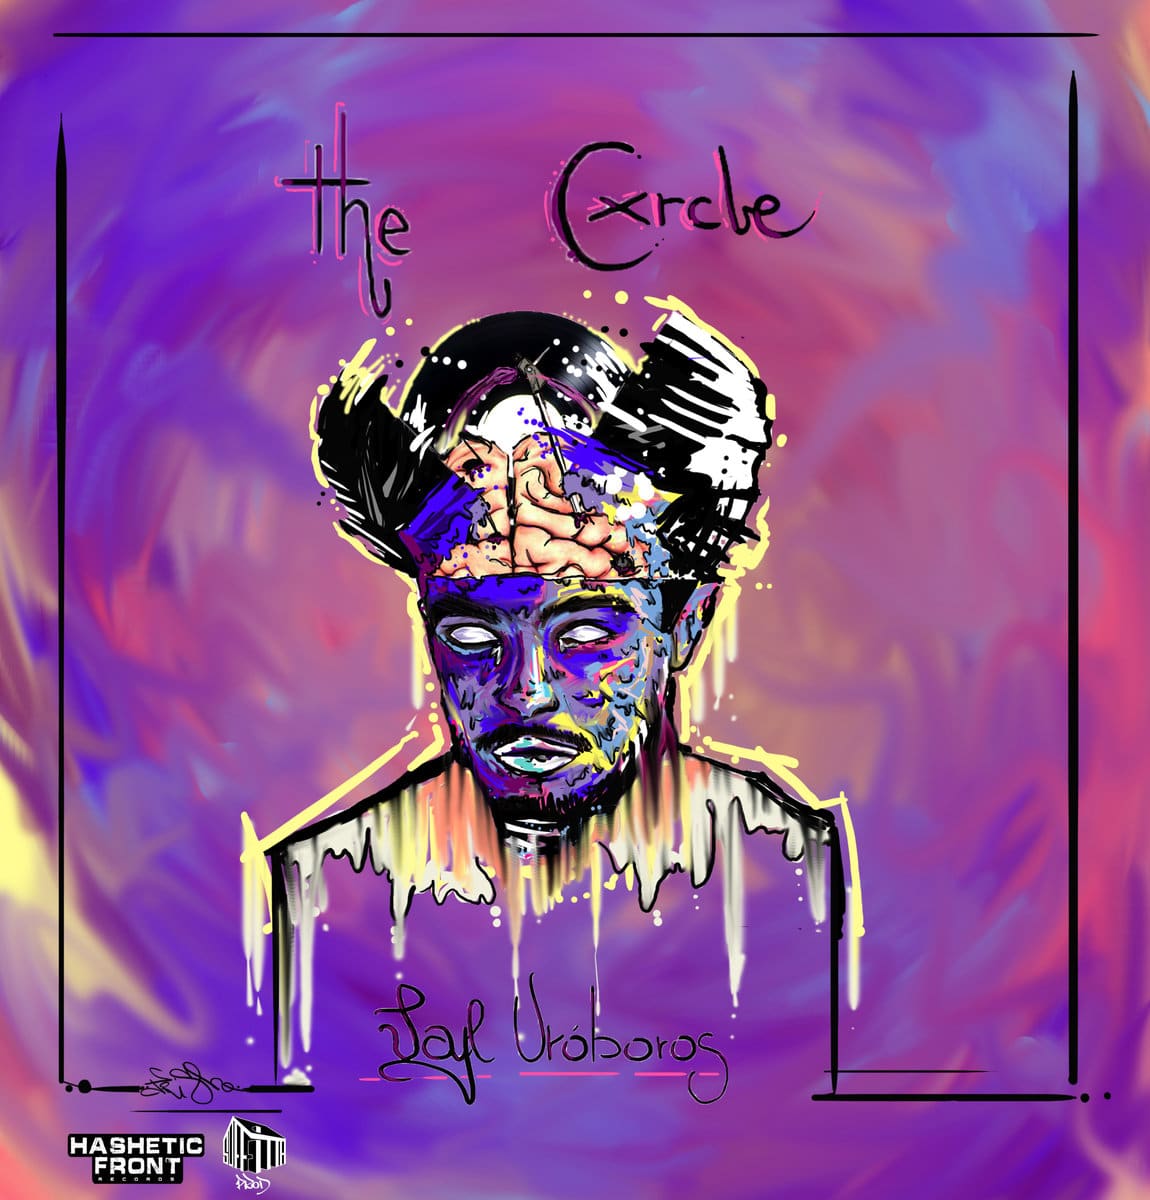 Jayl Uroboros - "The Cxrcle" (Release)